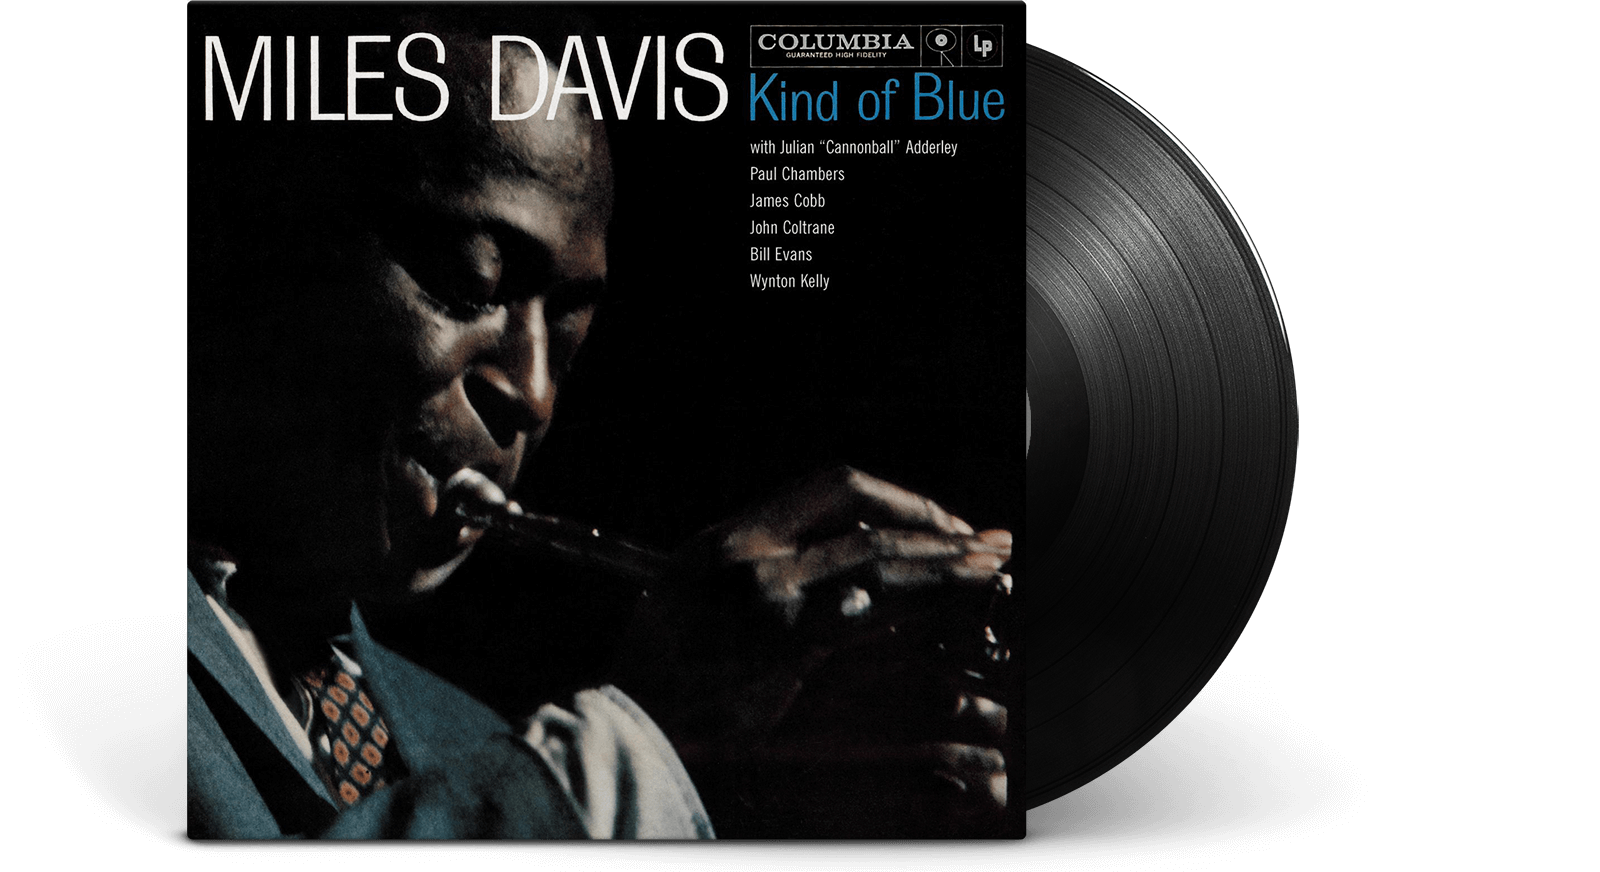 Cross Road Blues (Limited Gatefold Edition) - Jazz Messengers